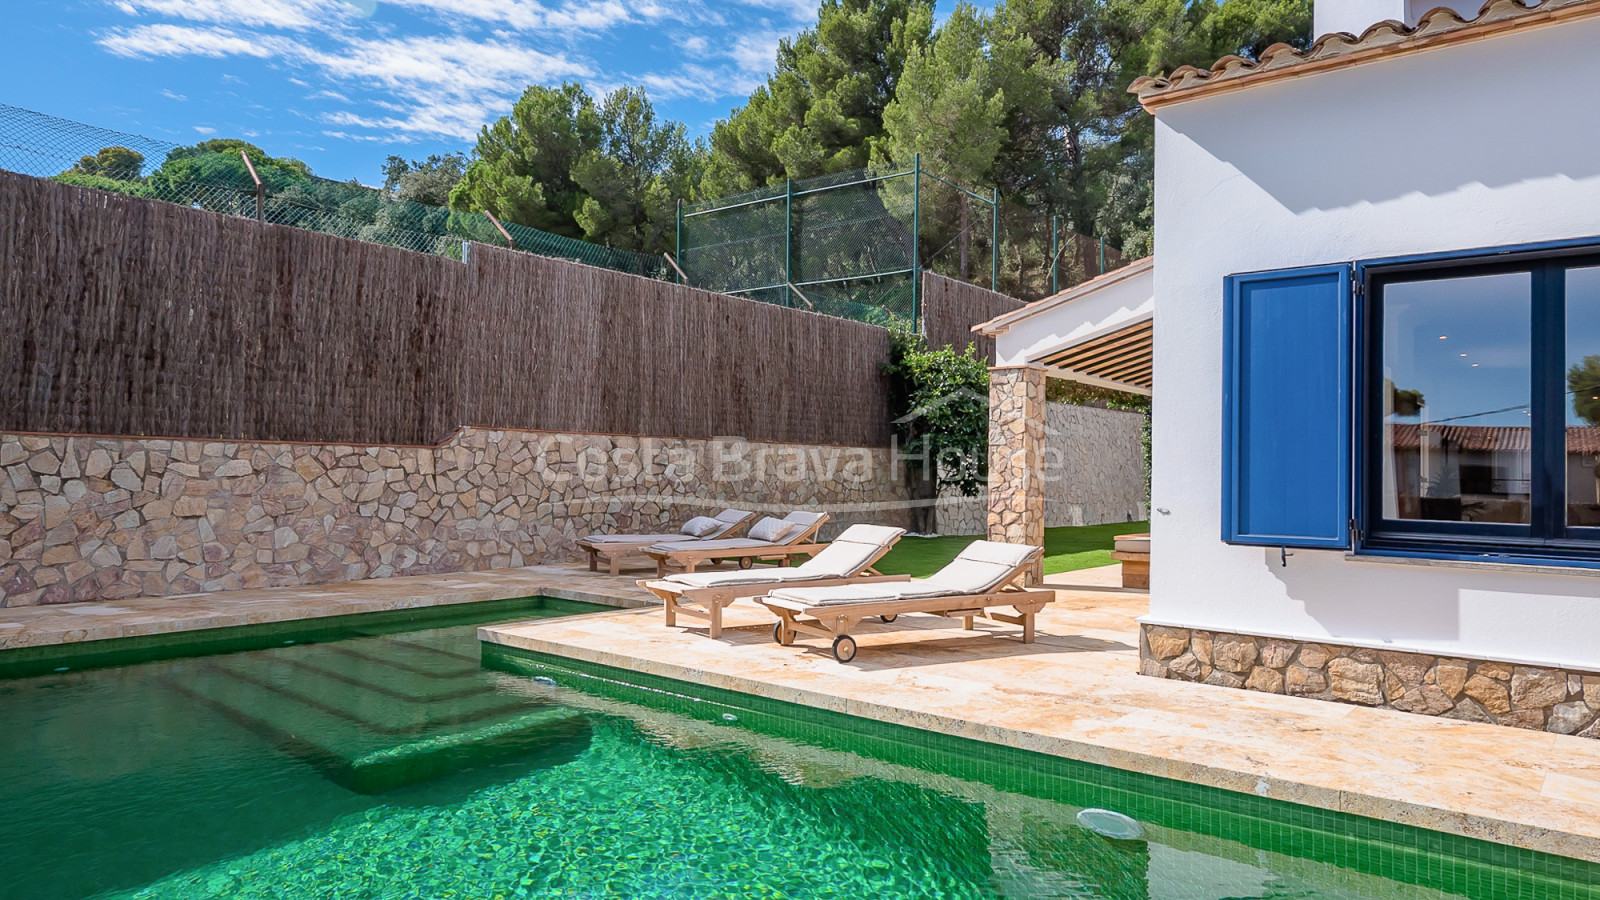 Elegant villa in Calella Palafrugell, 5 min beach, garden and pool